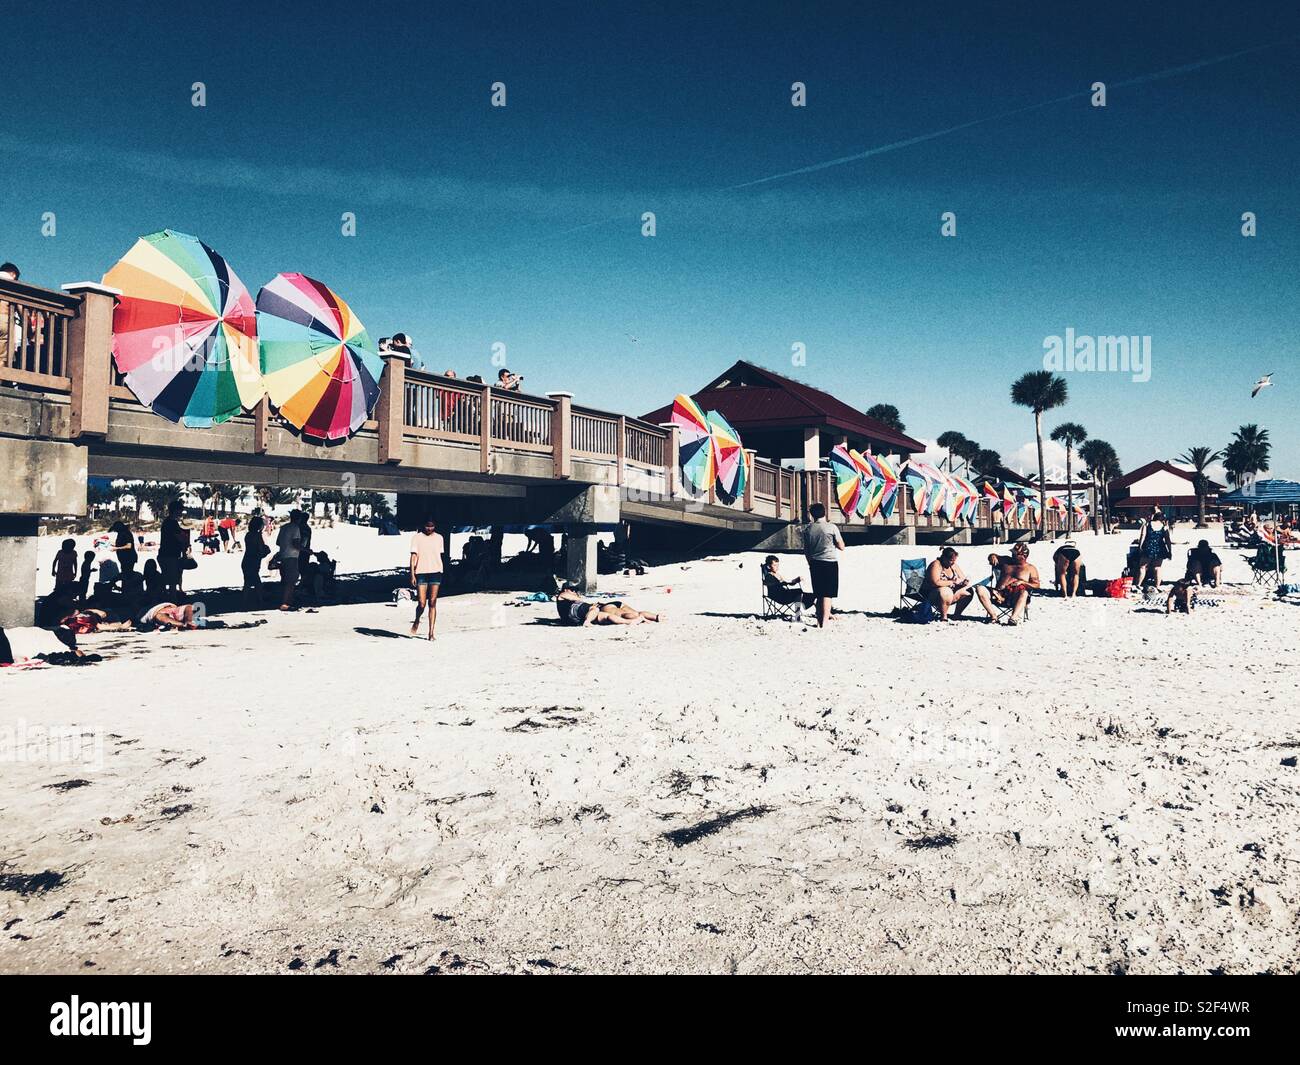 Boardwalk of Pier 60 on Clearwater beach in Florida Stock Photo